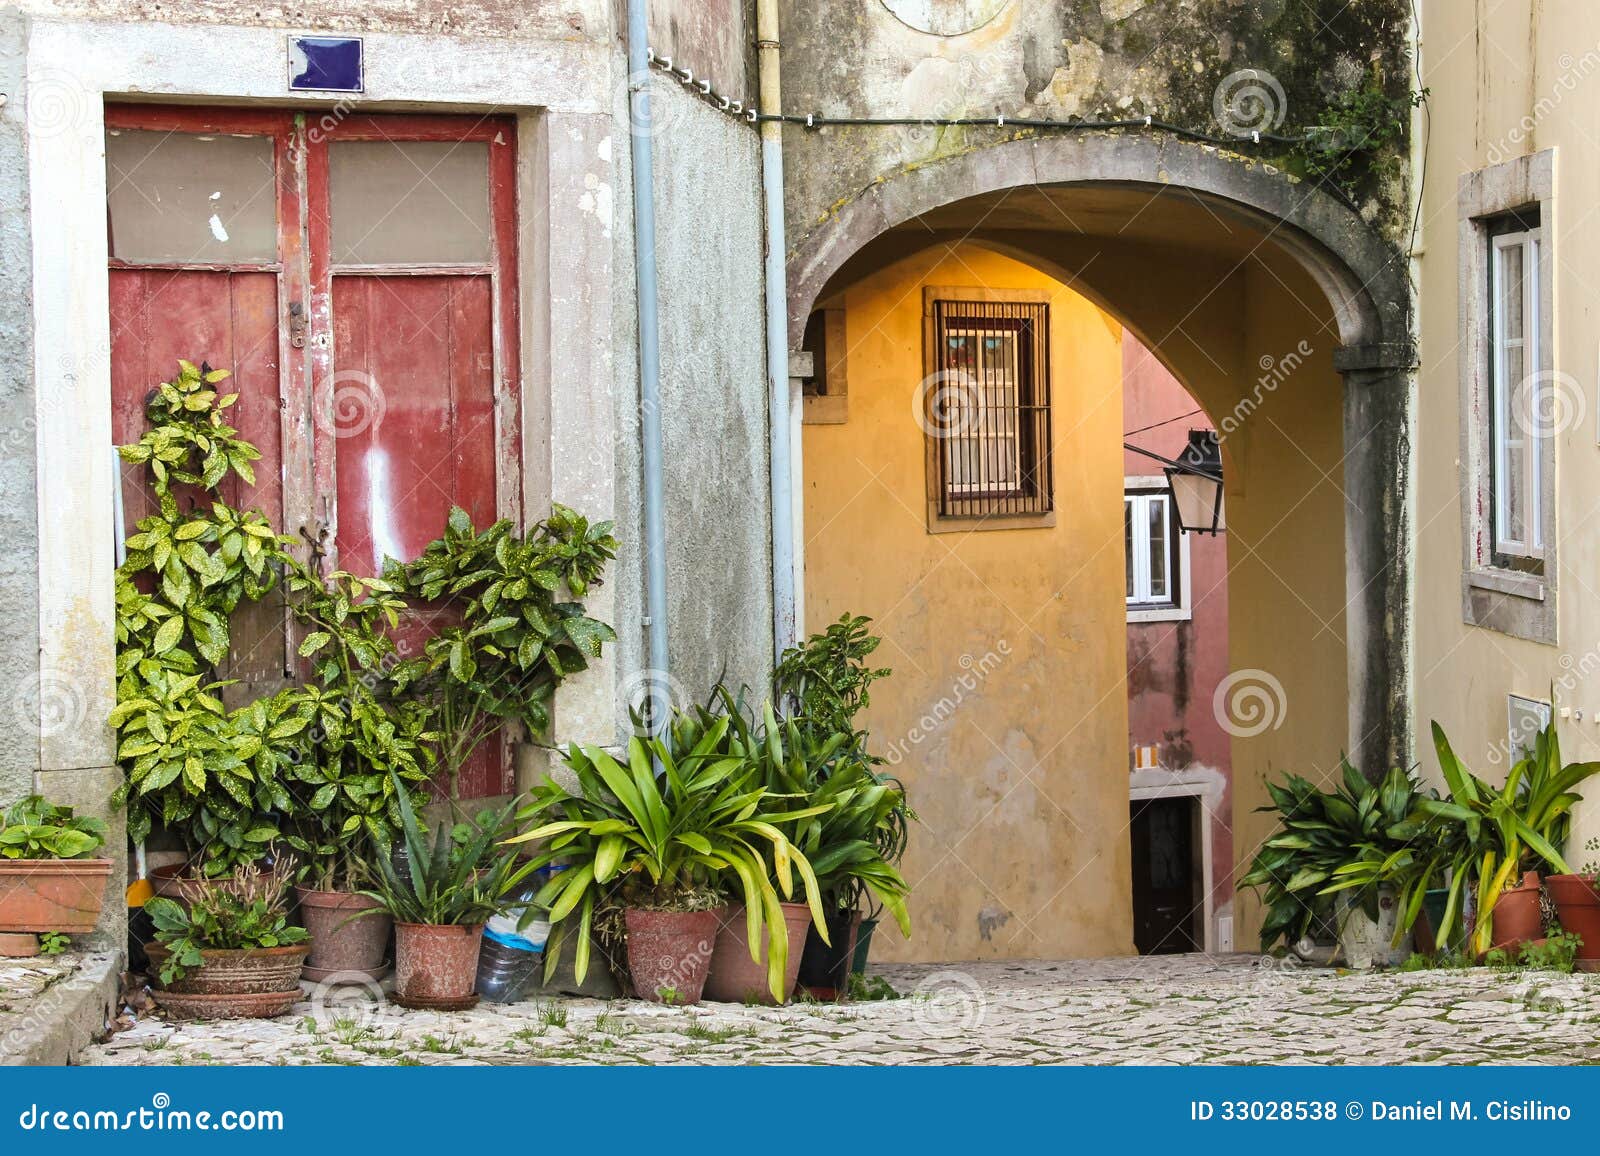 picturesque corner in sintra. portugal